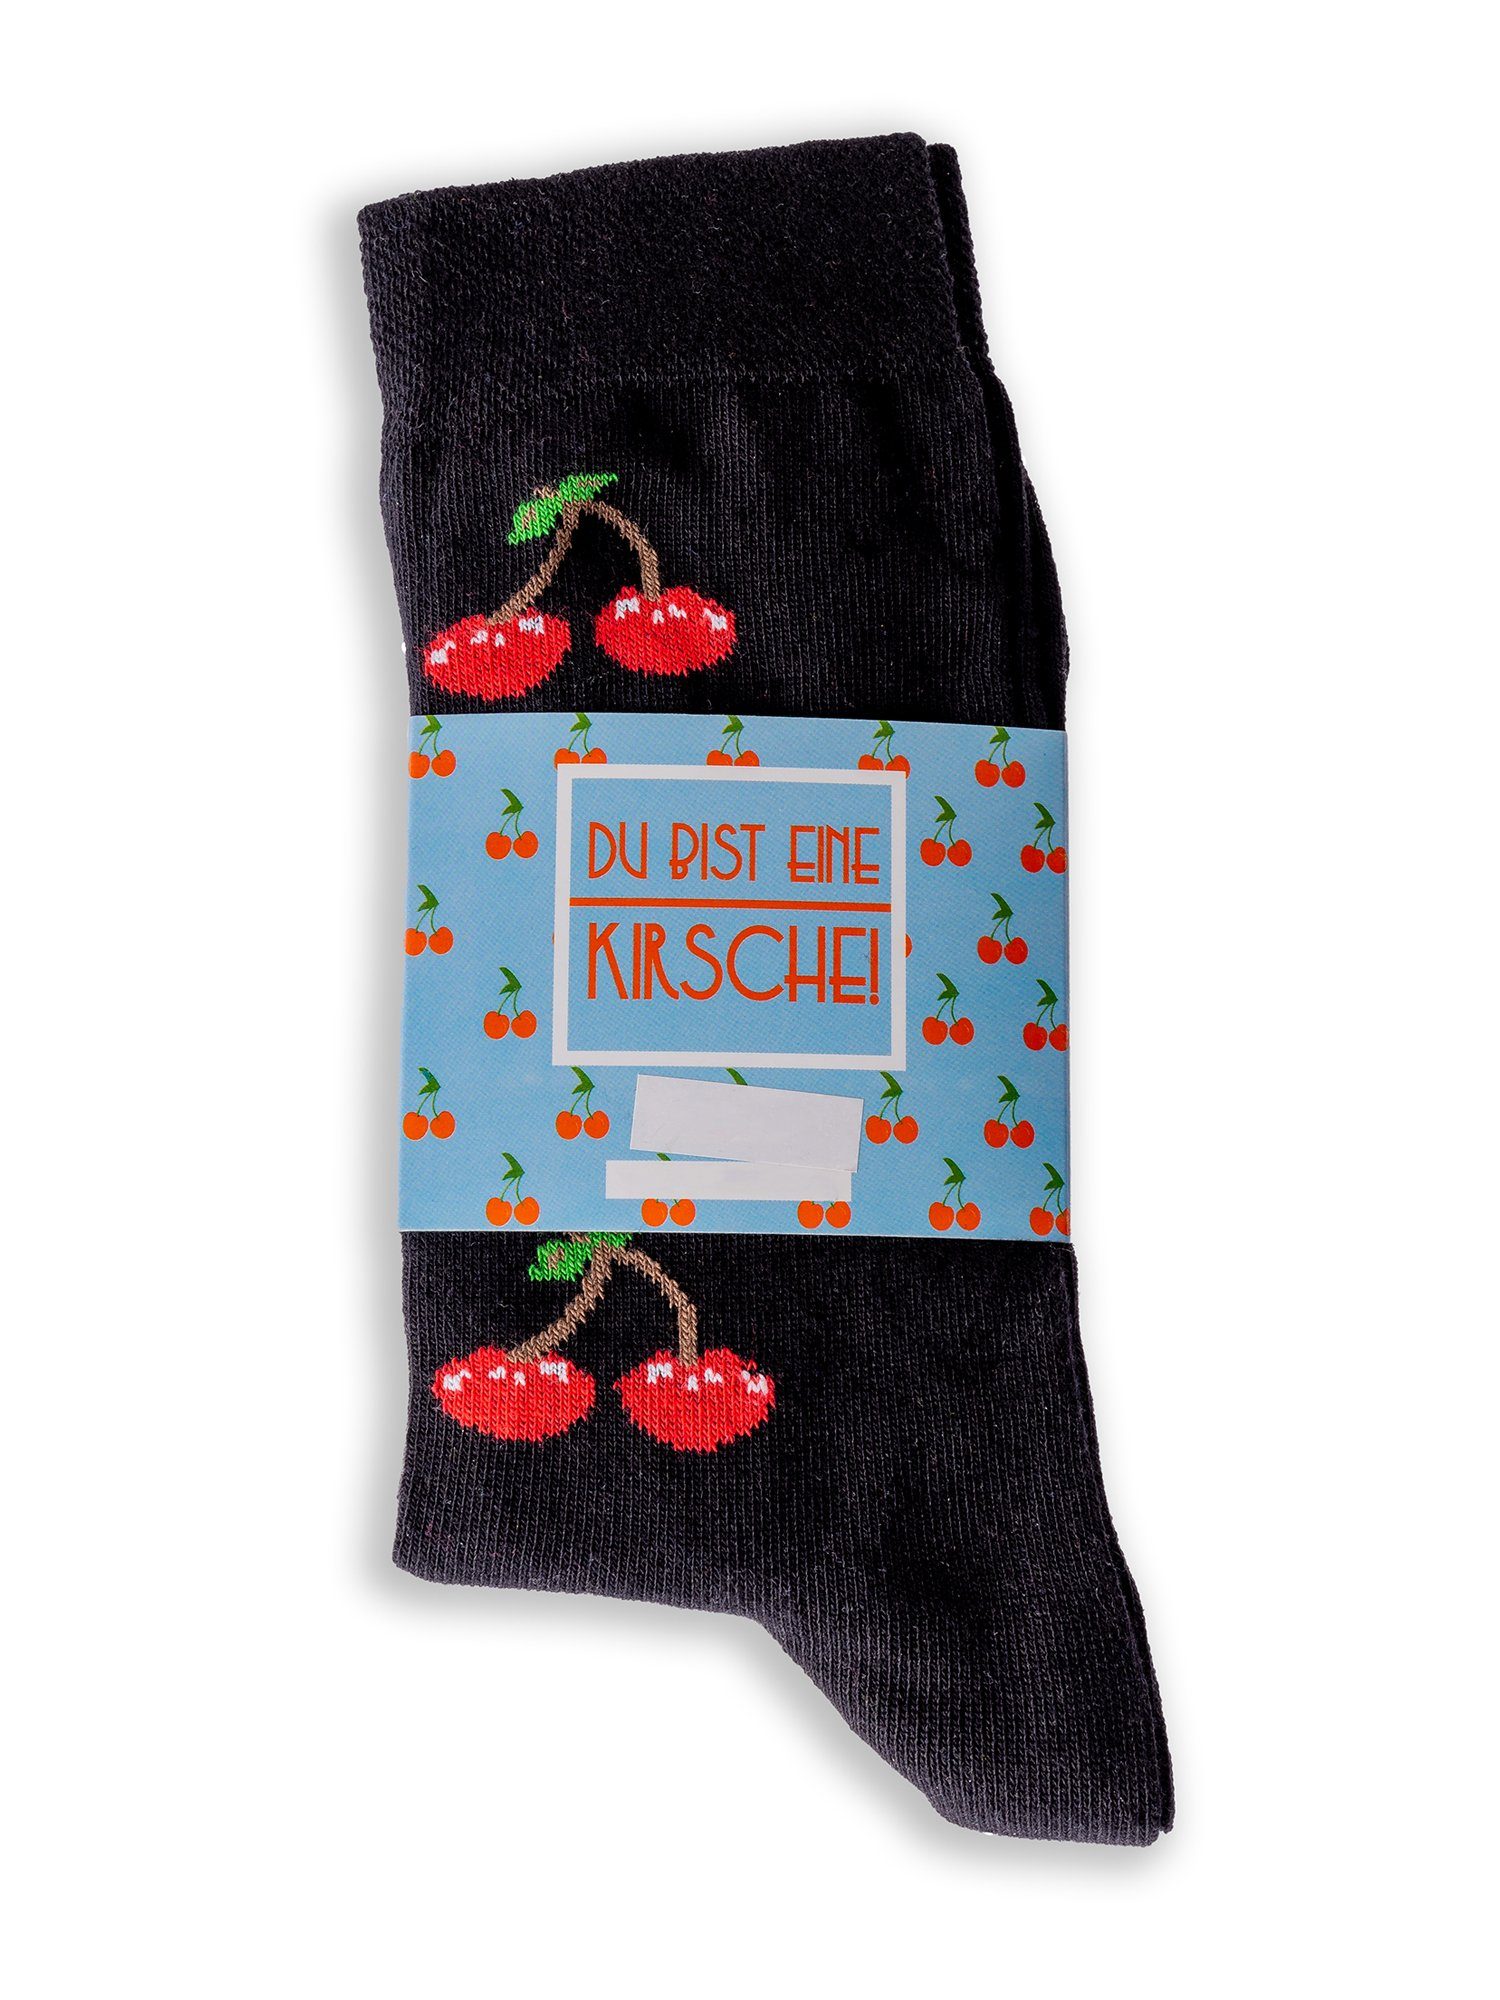 Chili Lifestyle Cherry Freizeitsocken Banderole Leisure Socks